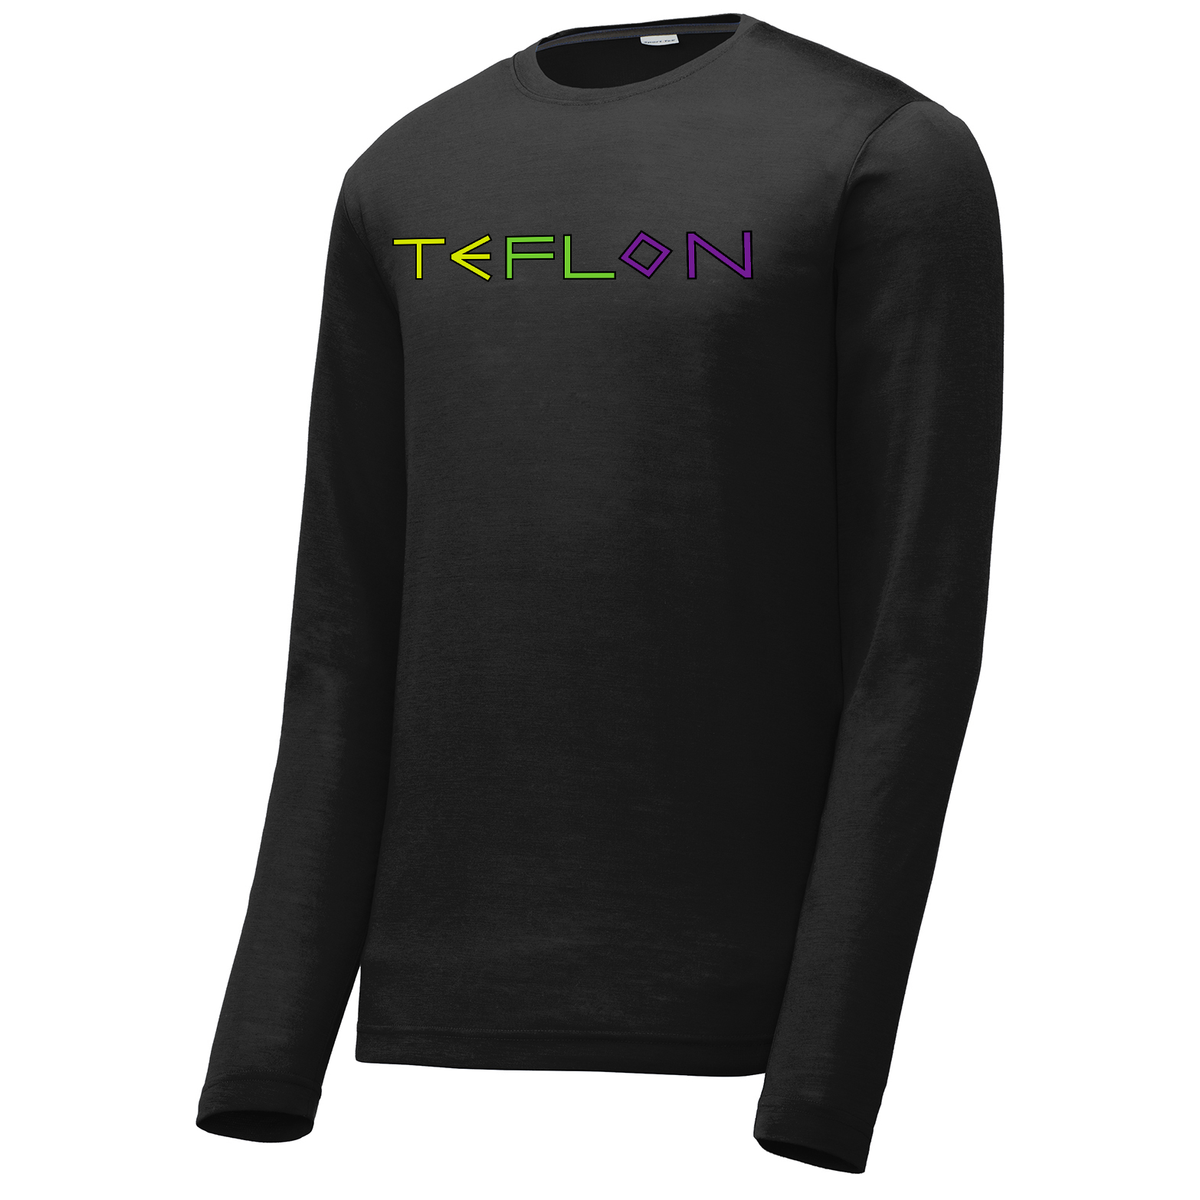 Team Teflon Long Sleeve CottonTouch Performance Shirt